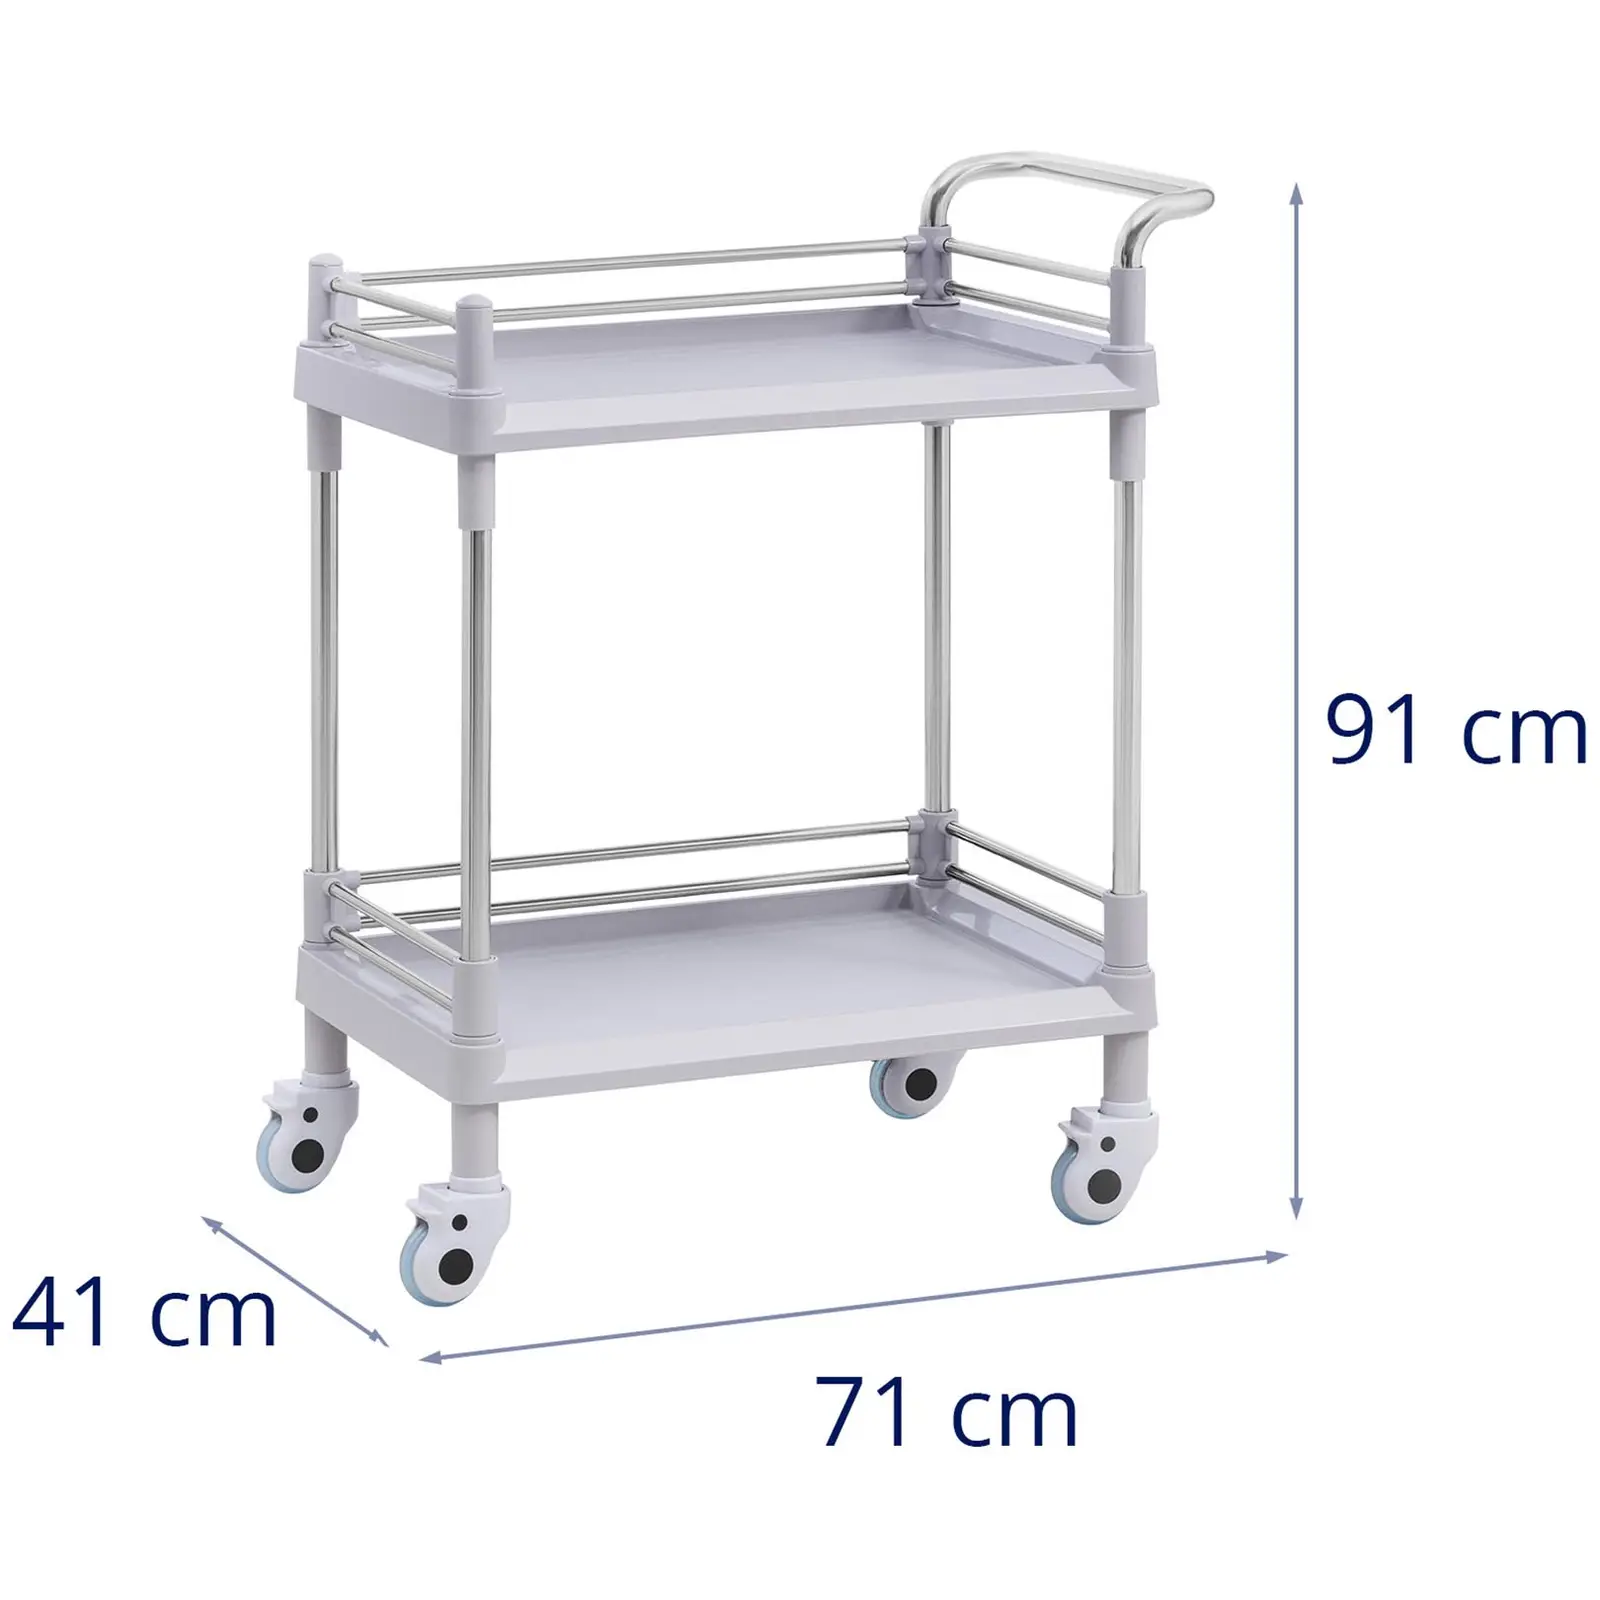 B-varer Laboratory Trolley - 2 shelves each 54 x 37 x 5 cm - 20 kg